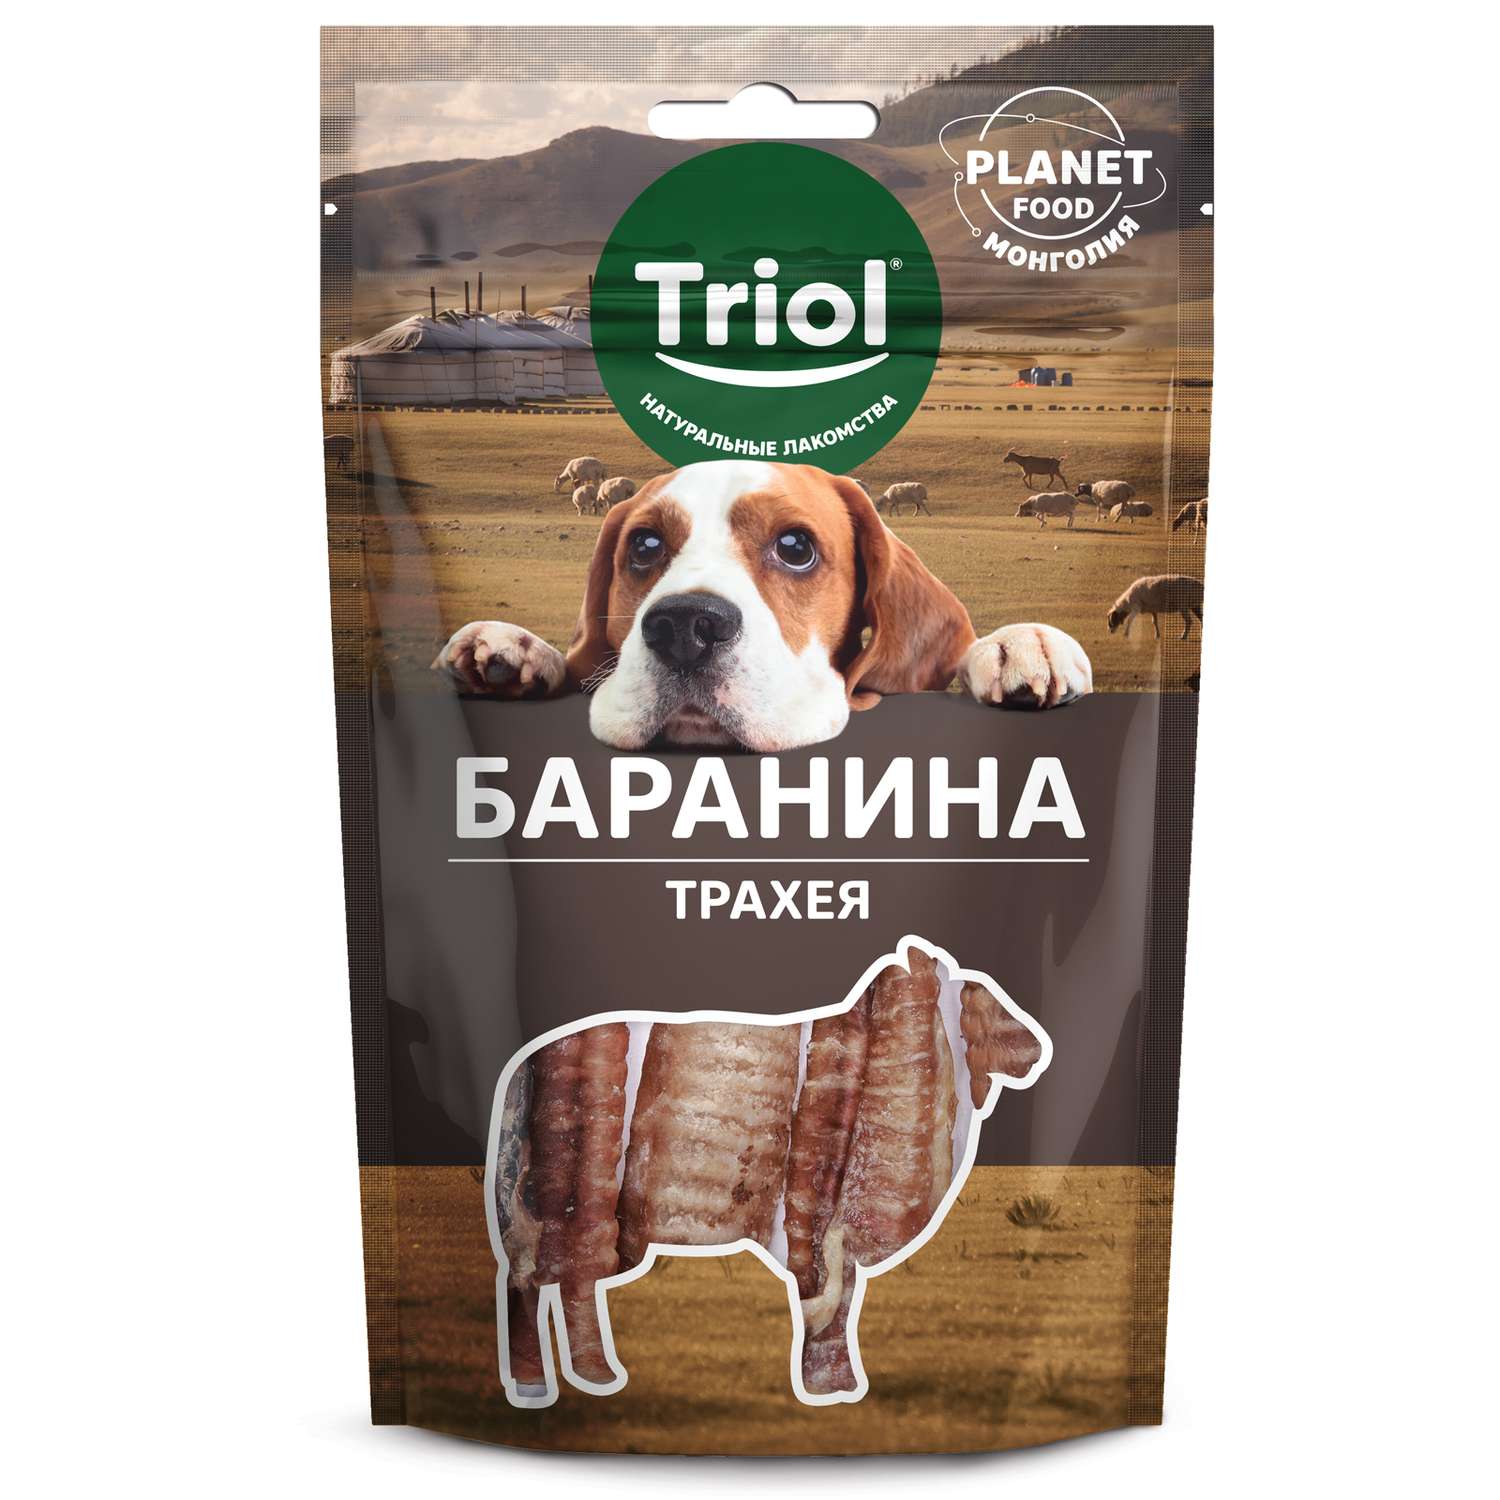 Лакомство для собак Triol 30г Planet food трахея баранья - фото 1